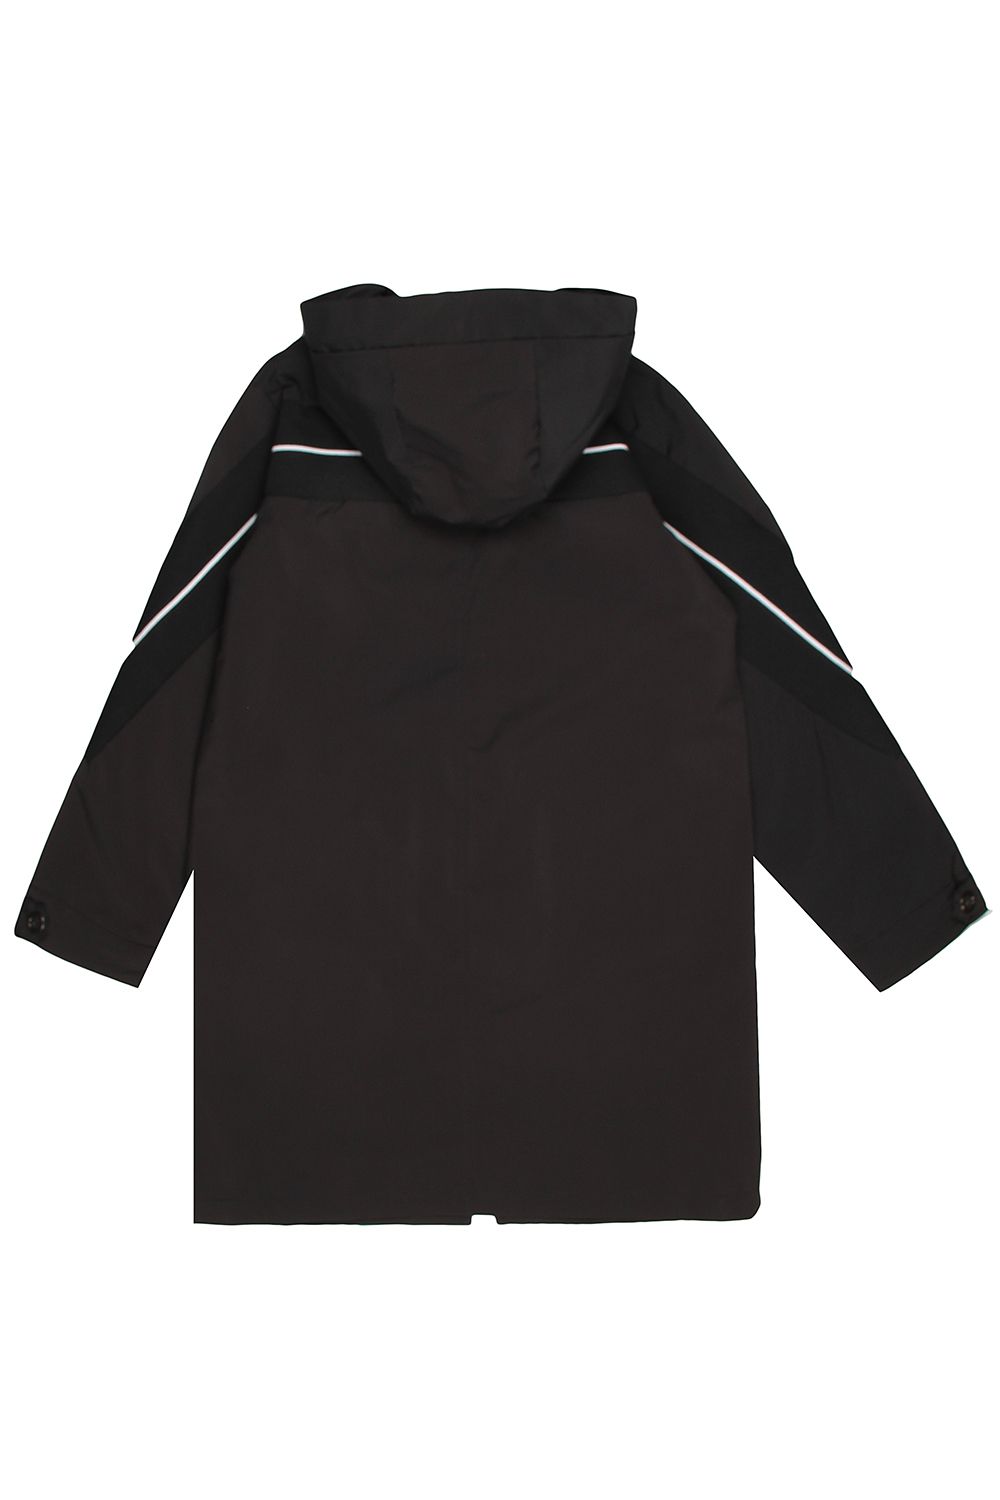 Куртка Noble People, размер 128, цвет черный 18607-518 - фото 3